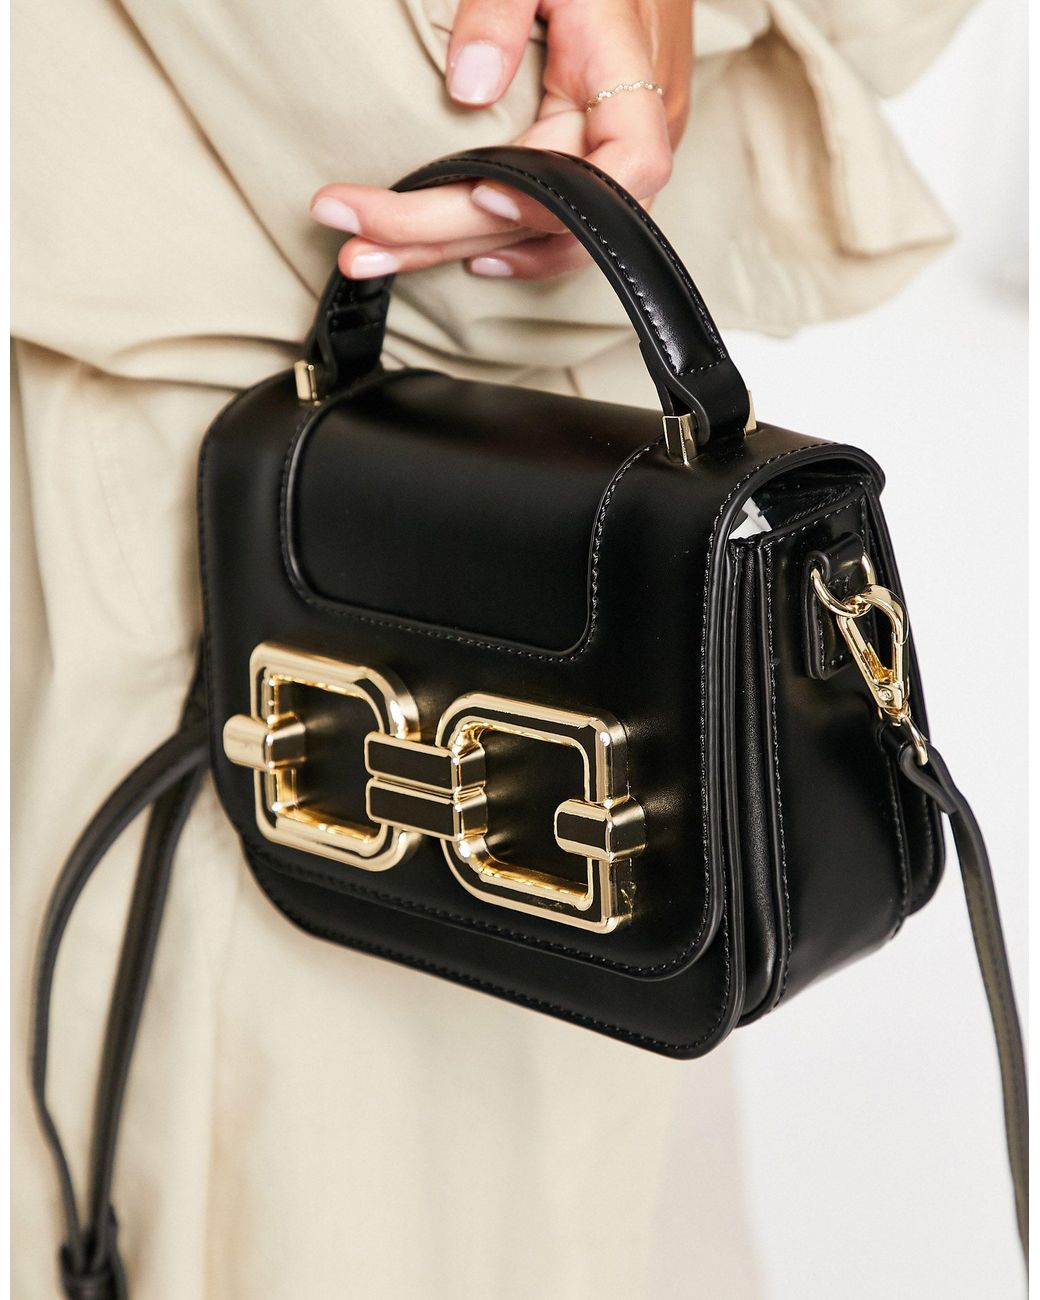 ALDO Naveah, Black/Black: Handbags